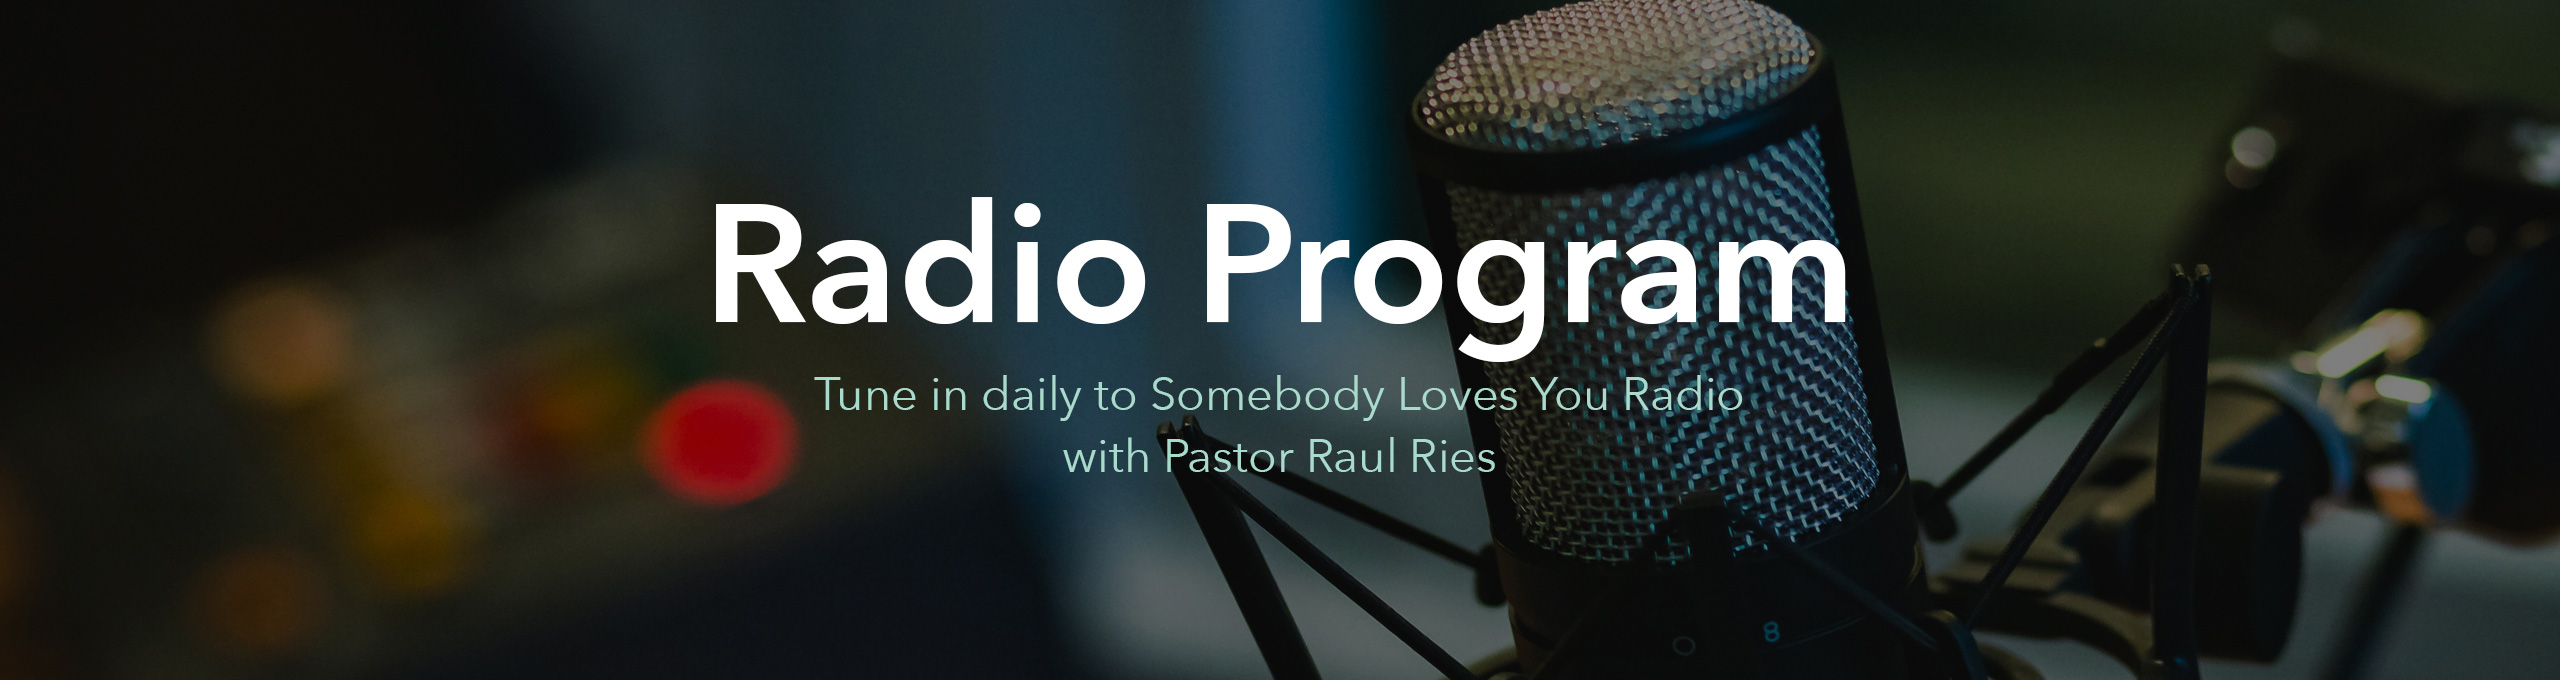 Radio Program